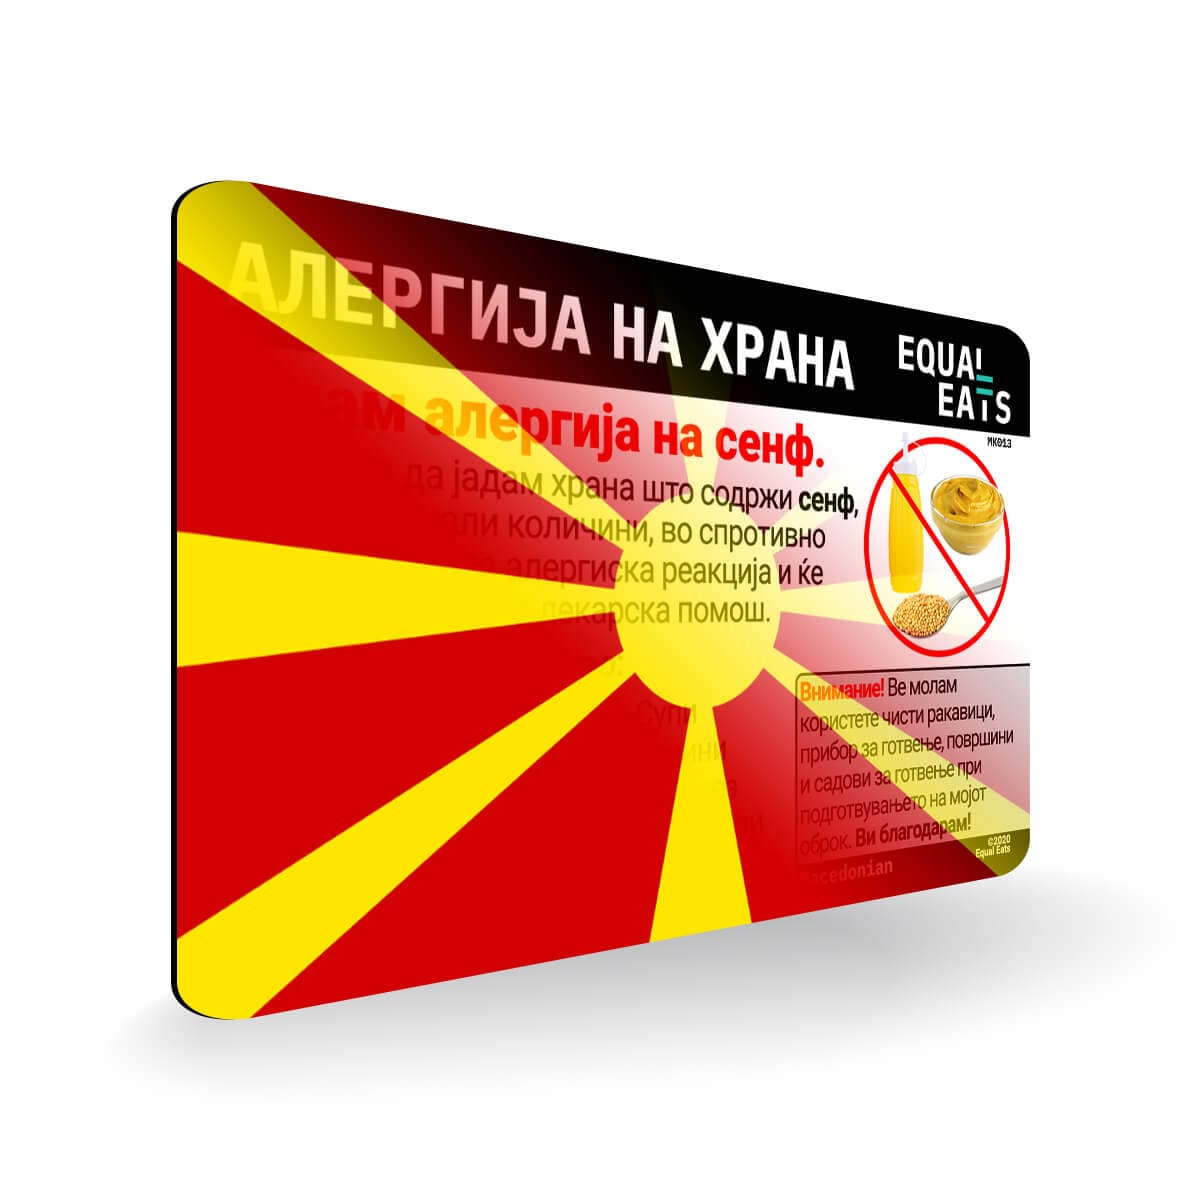 Mustard Allergy in Macedonian. Mustard Allergy Card for Macedonia